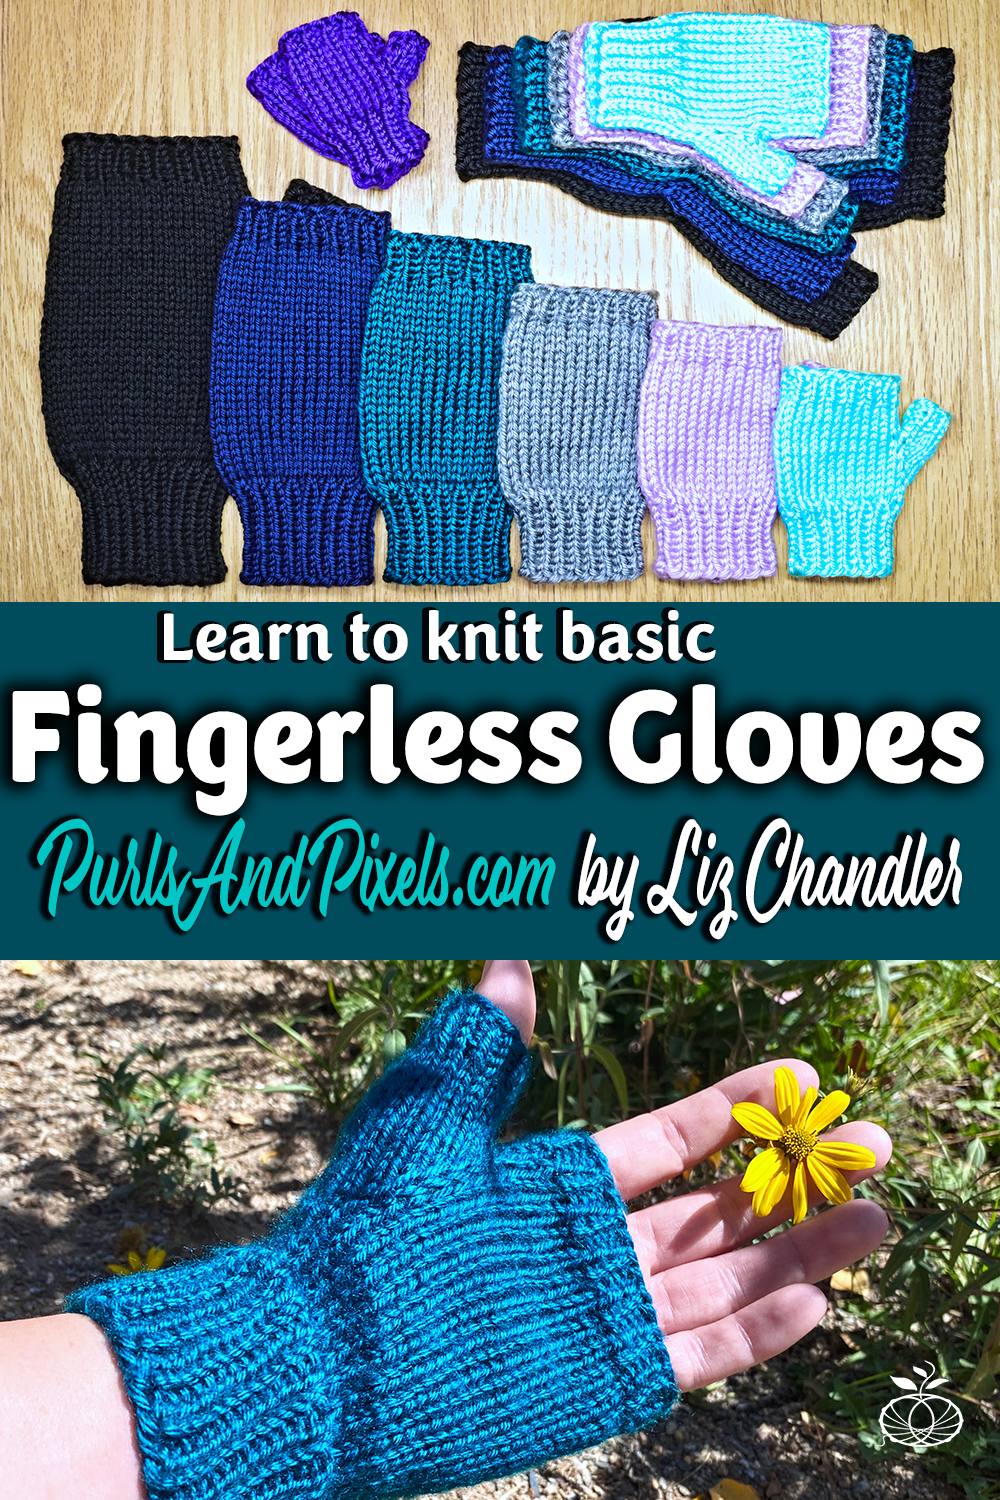 Basic fingerless glove knitting pattern from Liz Chandler @PurlsAndPixels.